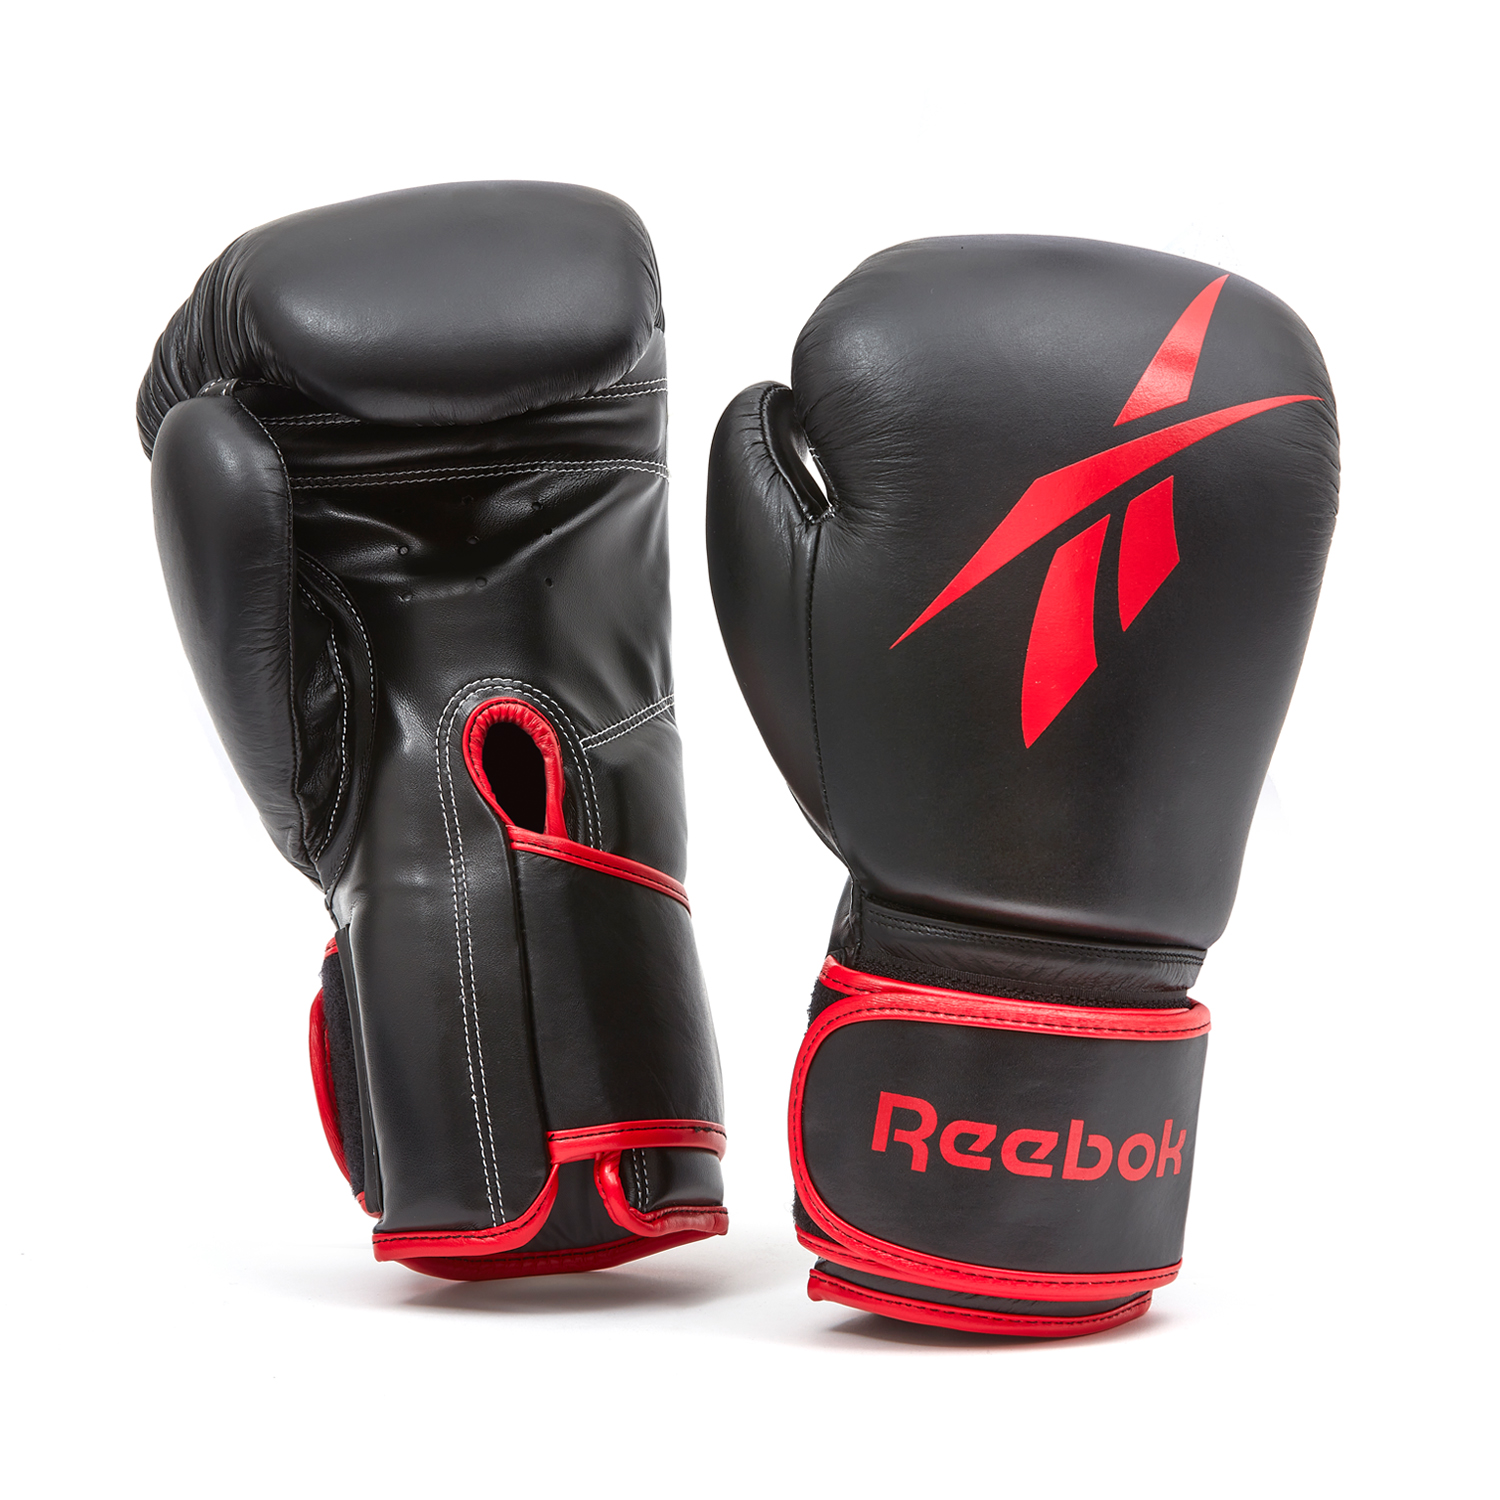 Reebok Fitness Leather Boxing Glove,16 Oz